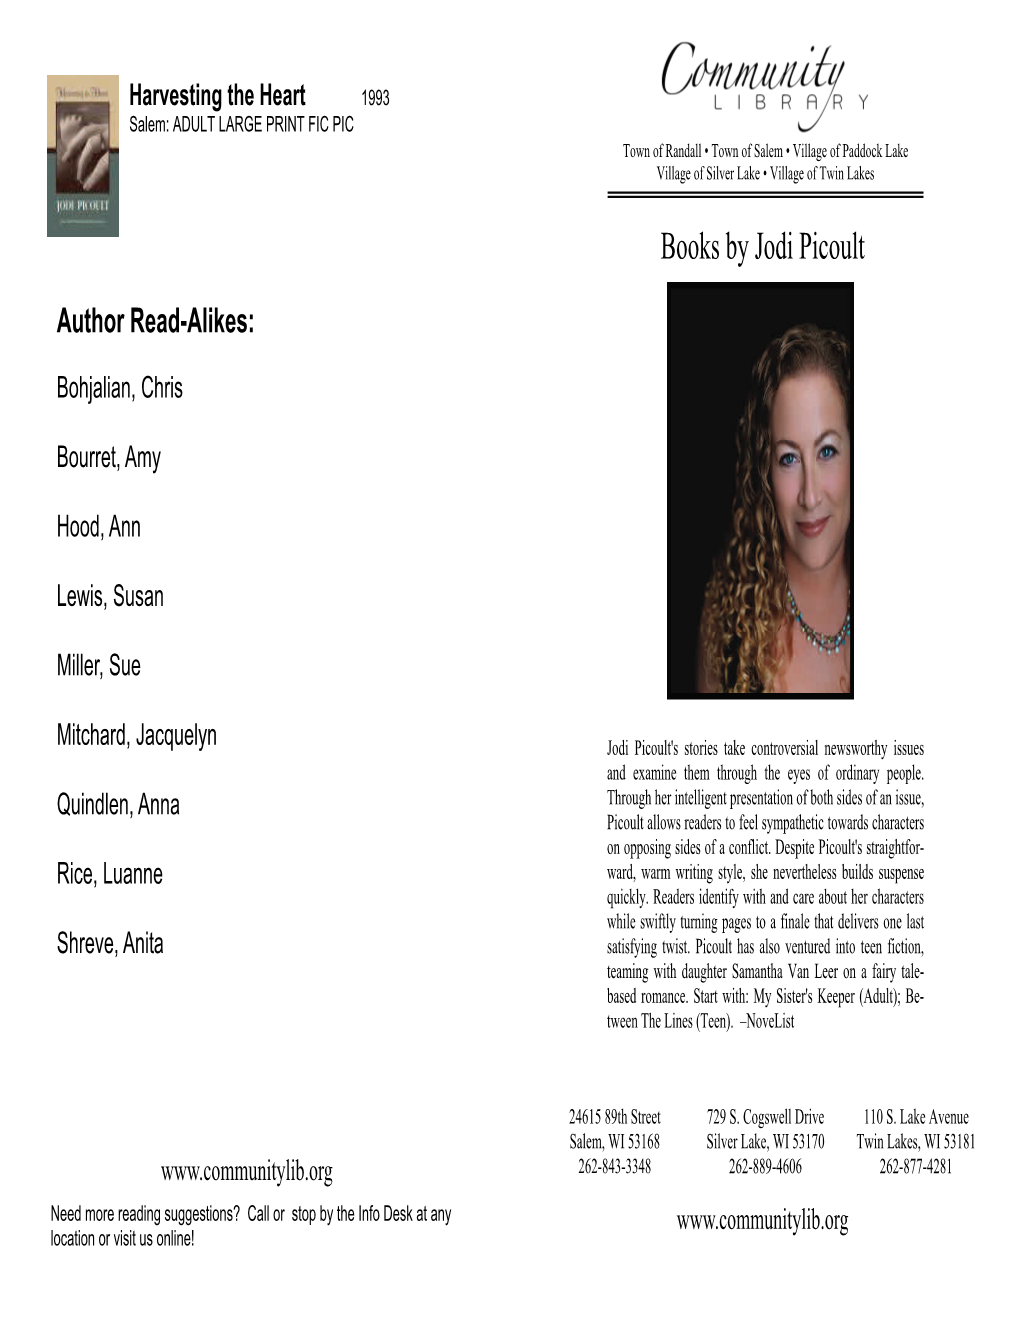 Jodi Picoult Booklist